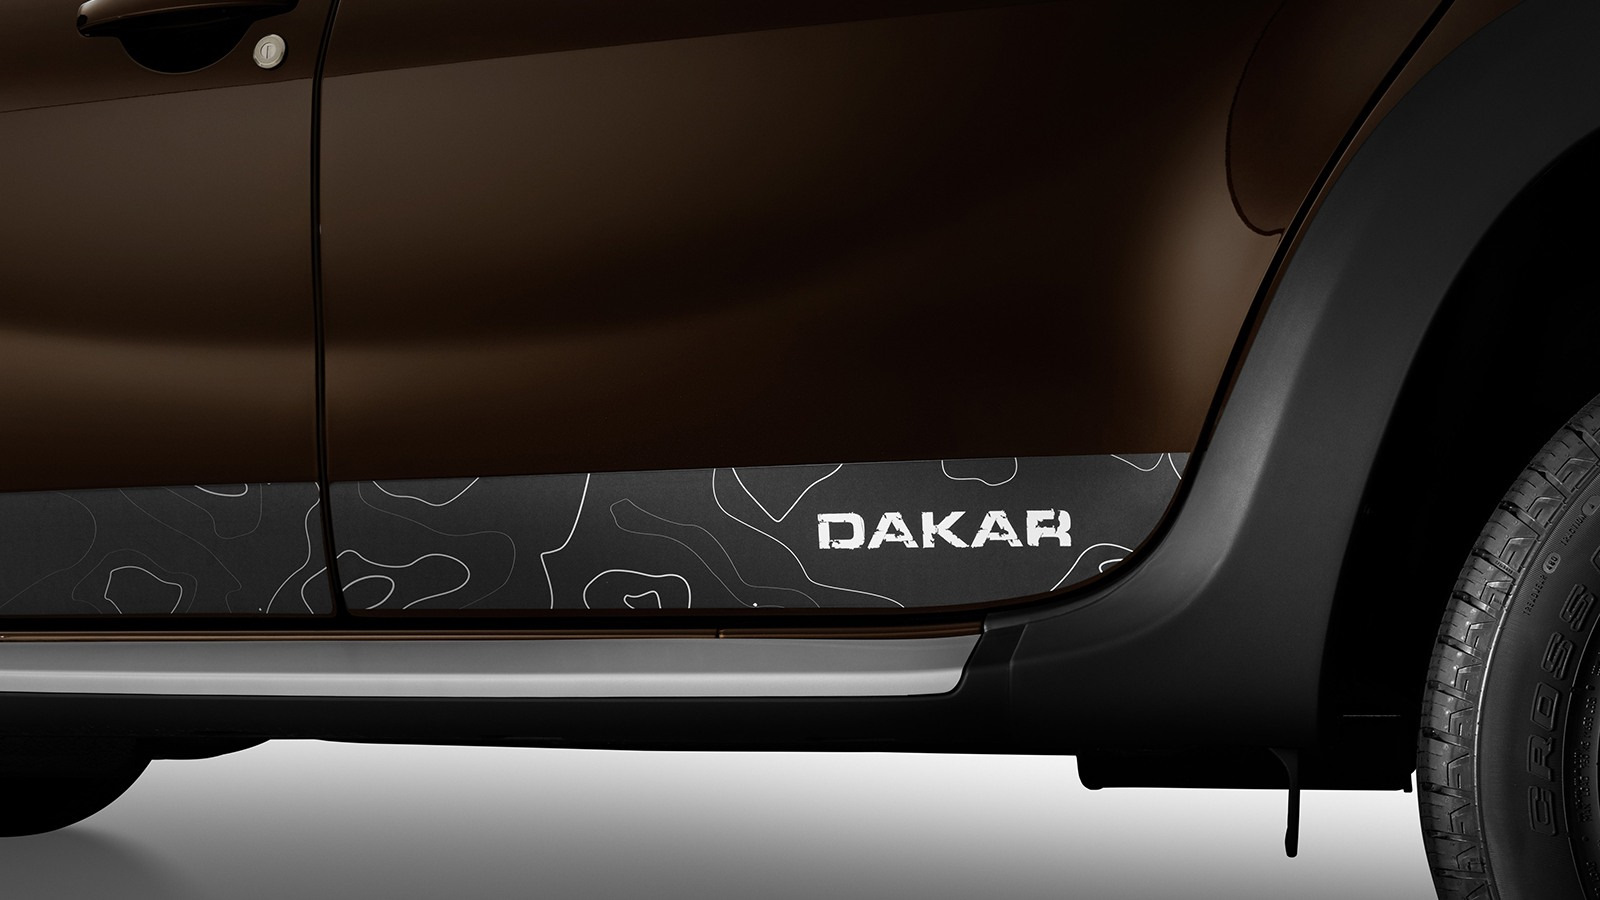 Накладка задней двери дастер. Рено Дастер Дакар 2017. Renault Duster Dakar Edition. Наклейки Рено Дастер Дакар. Накладки Рено Дастер Дакар.